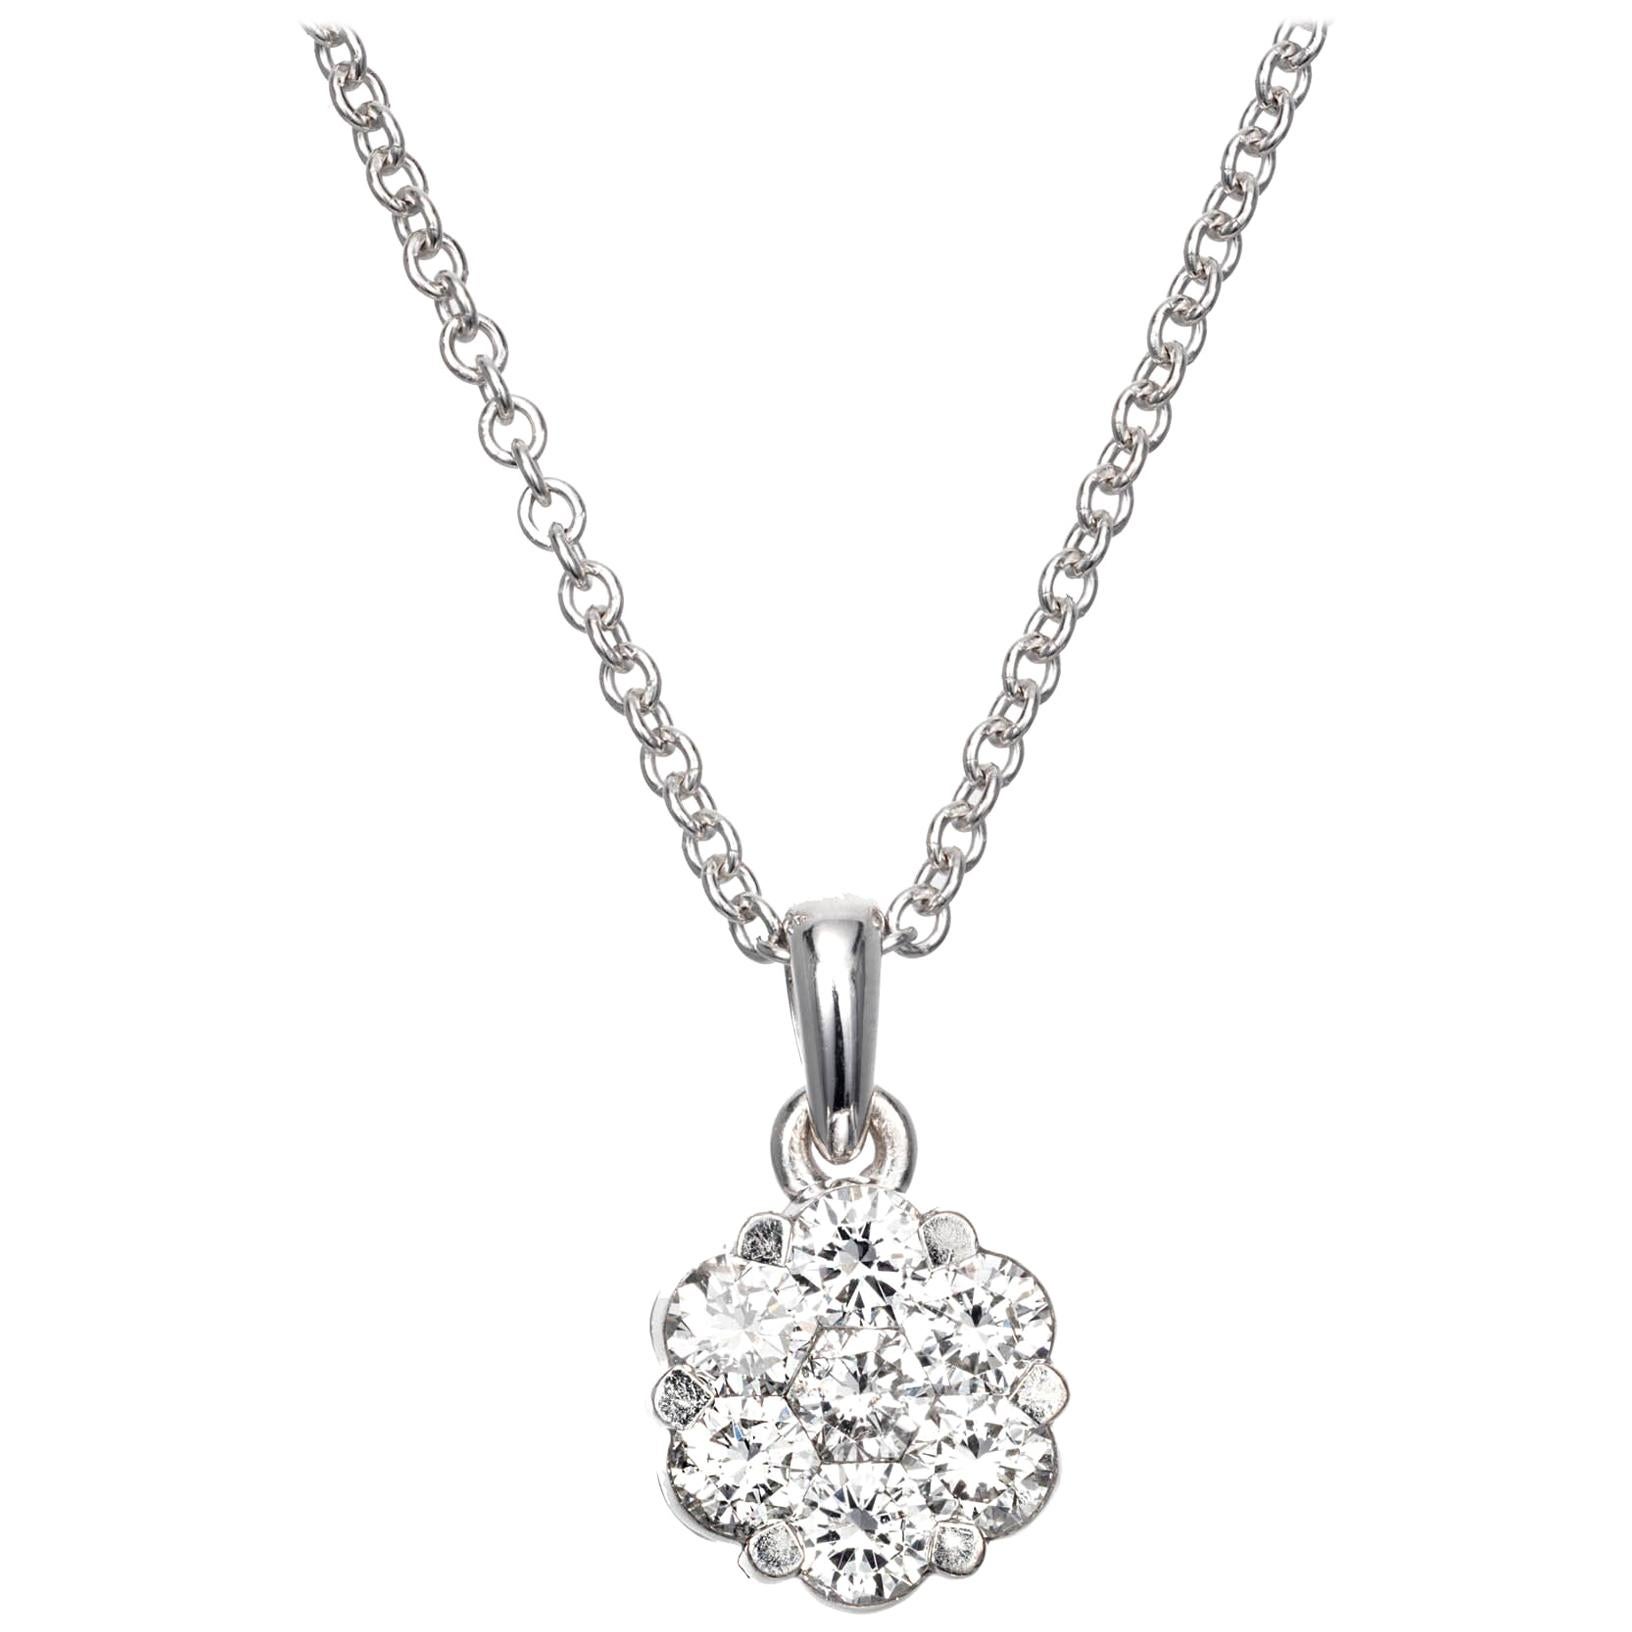 .60 Carat Diamond White Gold Cluster Pendant Necklace